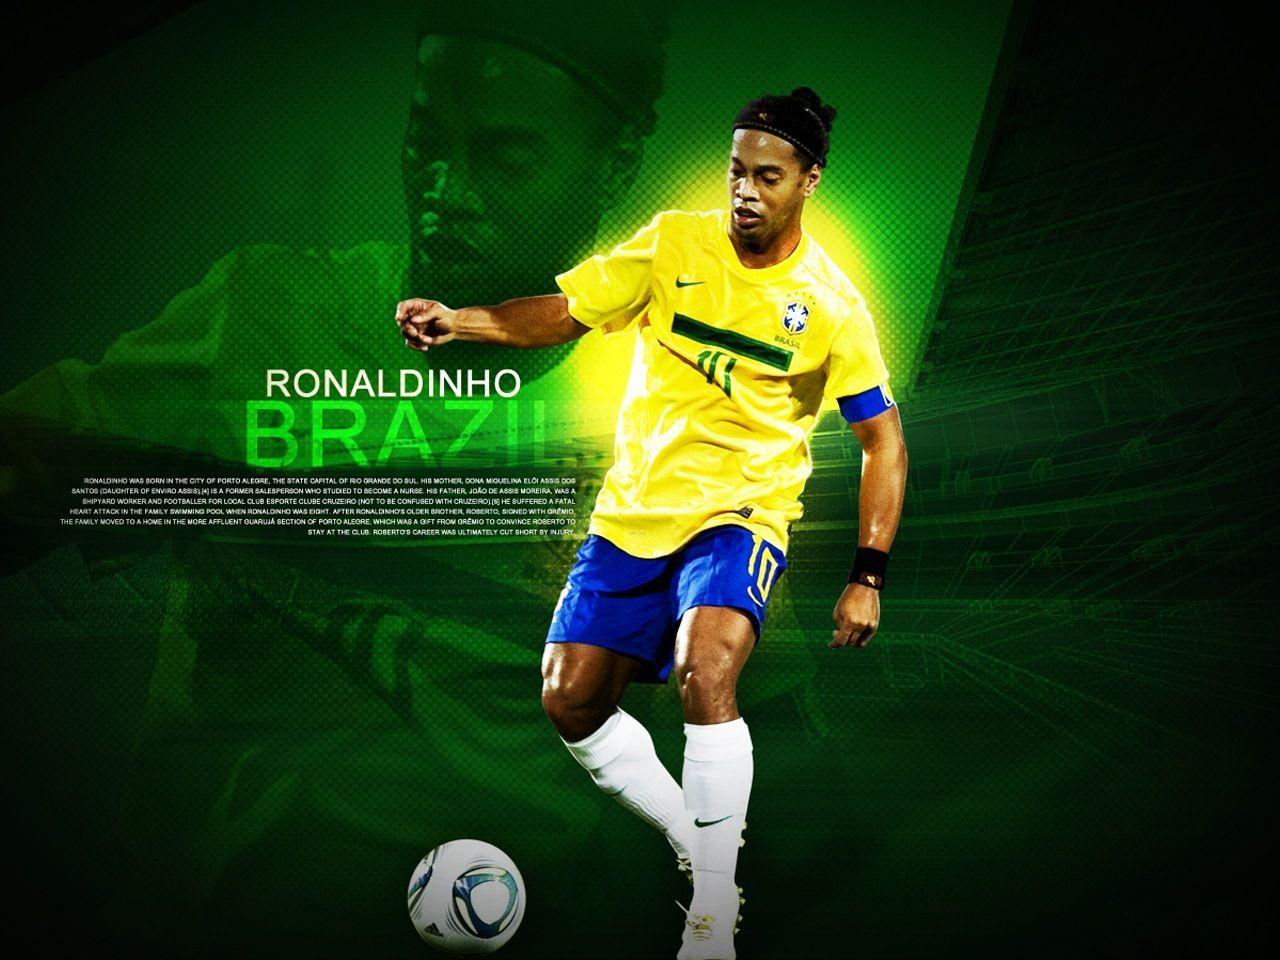 Ronaldinho HD Picture ideas. HD picture, ronaldinho wallpaper, ronaldinho gaúcho